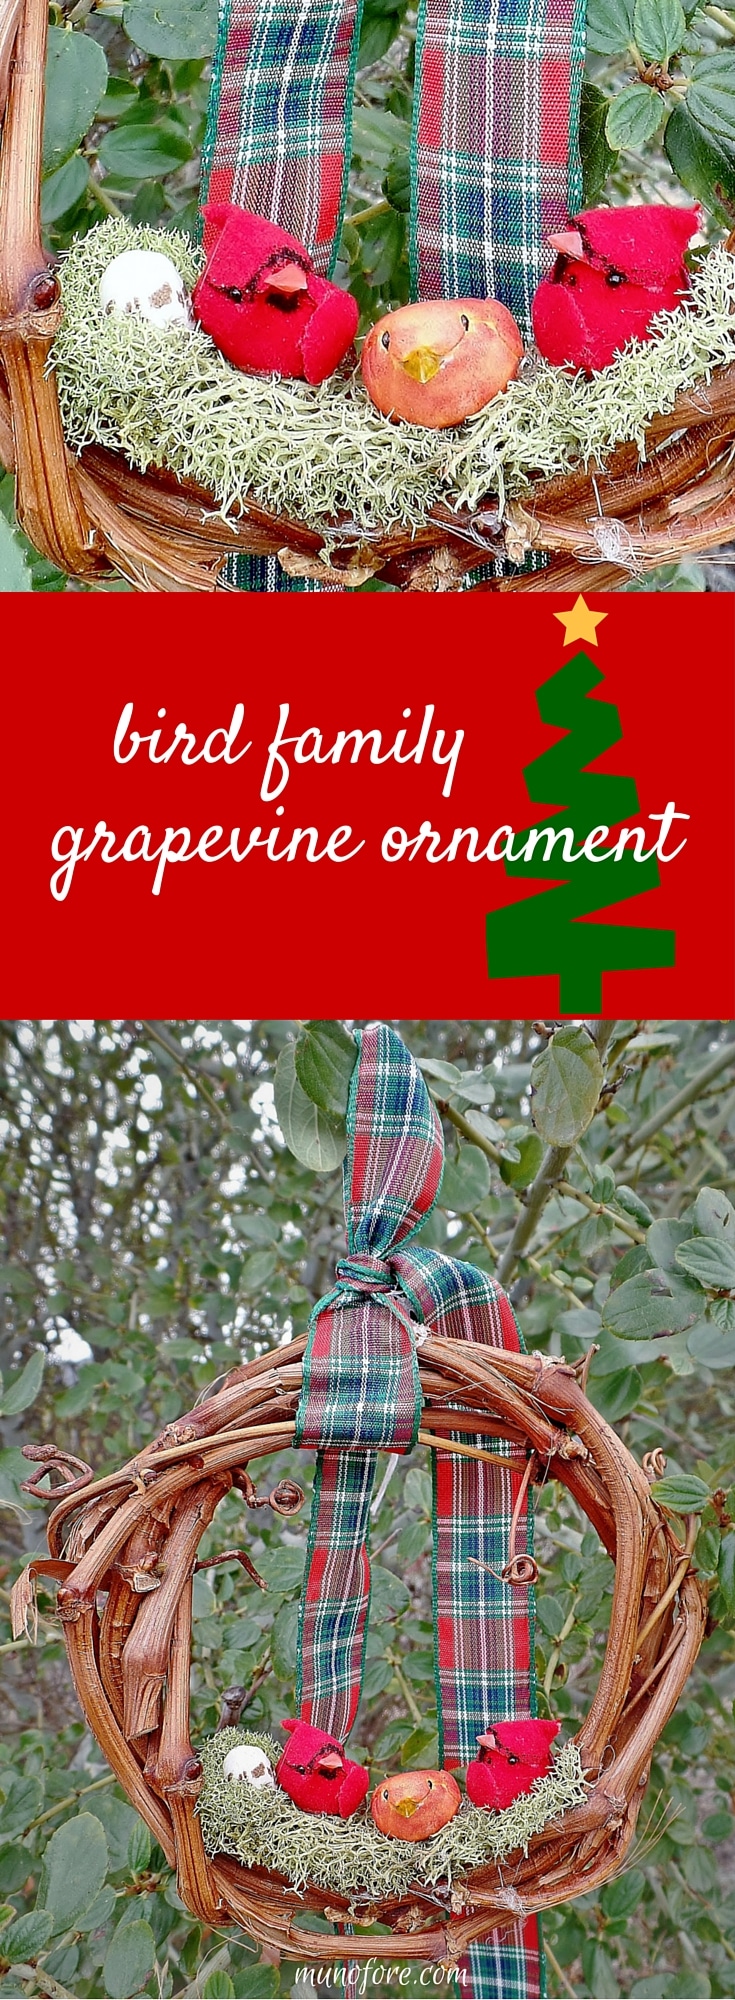 bird family grapevine wreath Christmas ornament